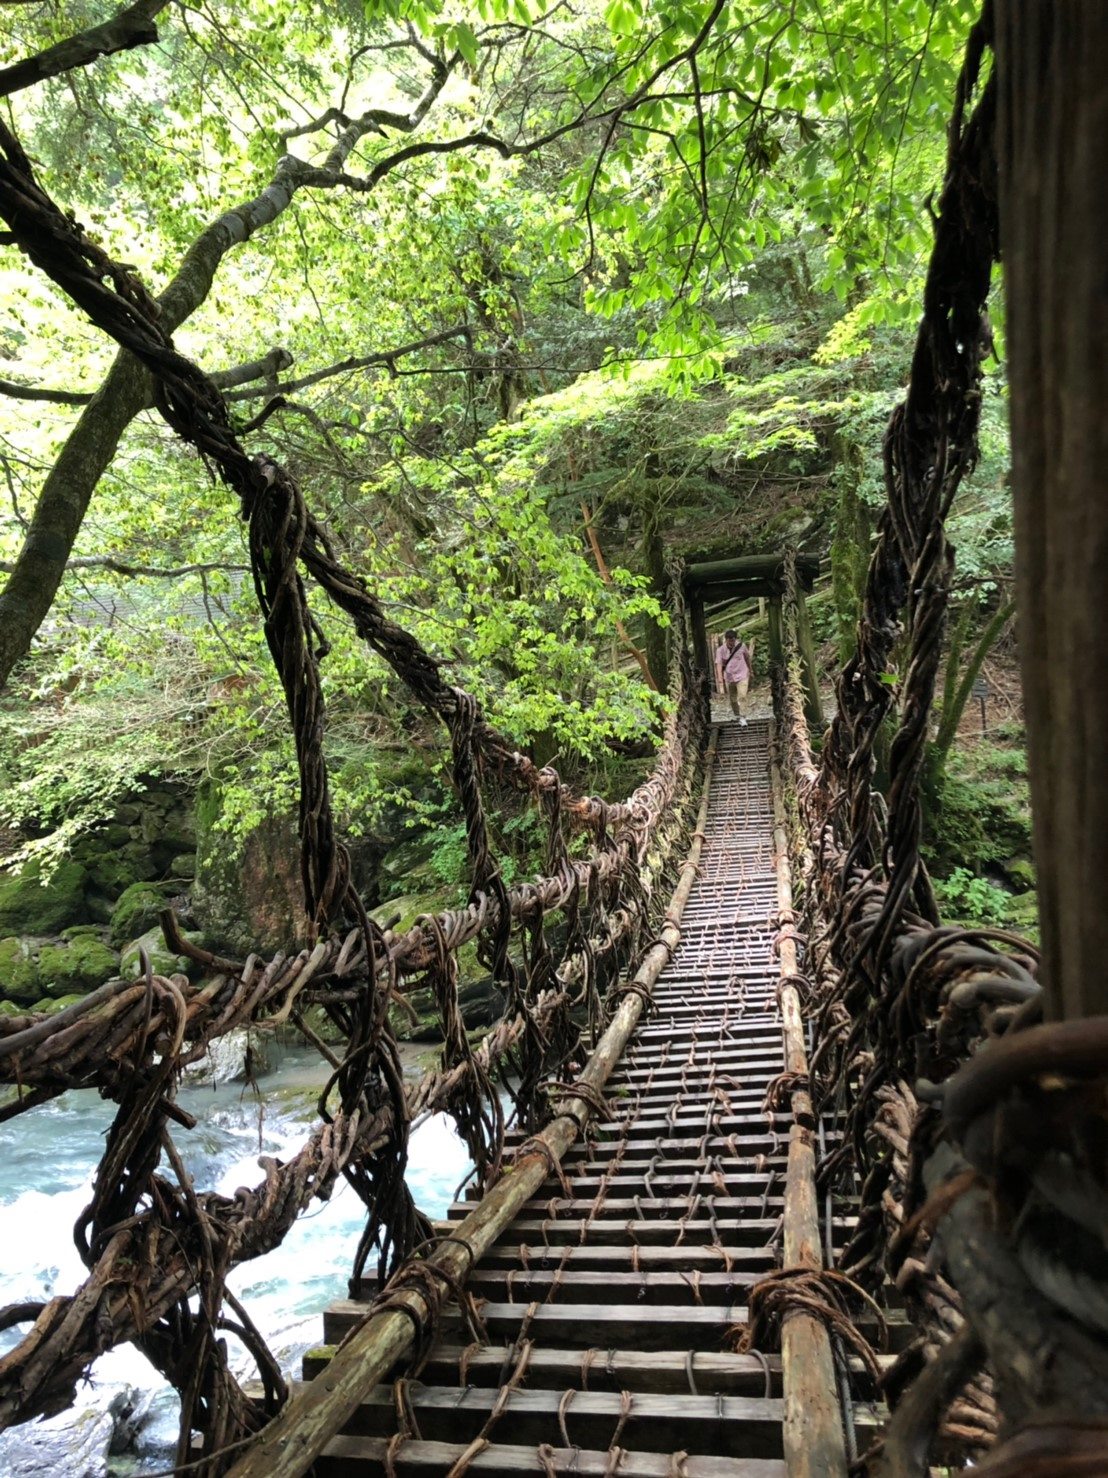 The vine bridges of the Iya Valley in Shikoku